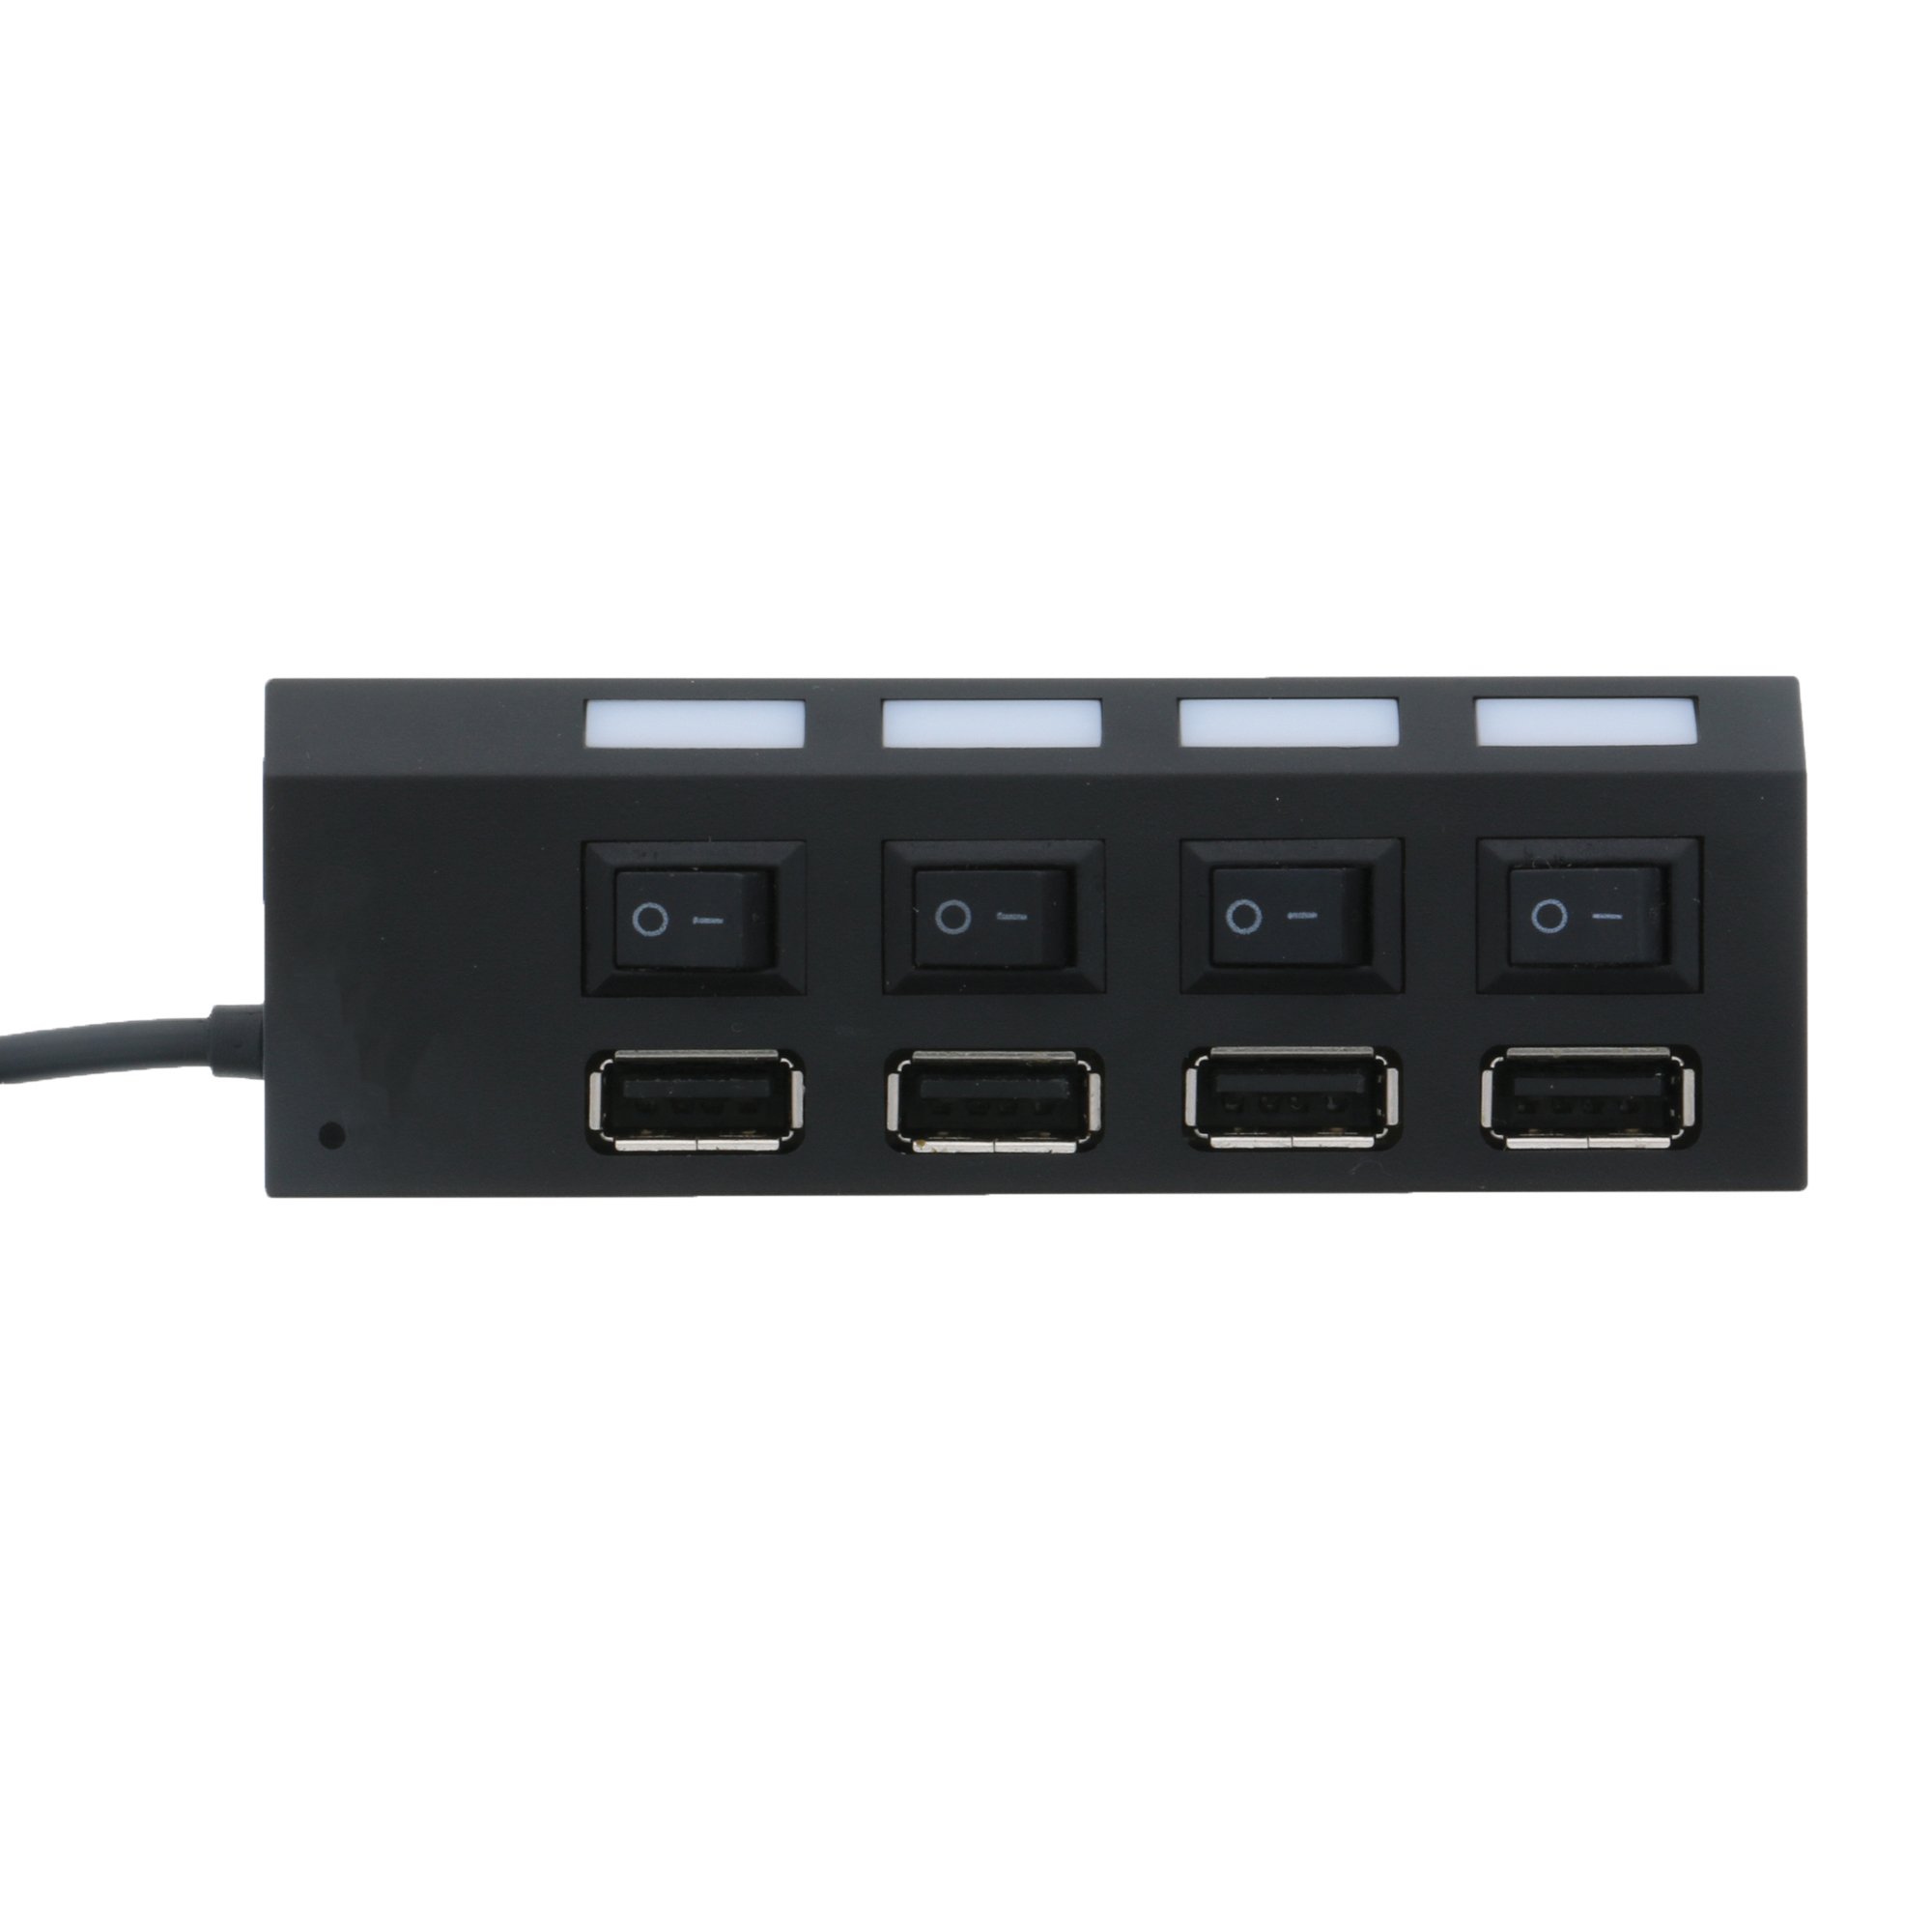 Xtreme Cables 95004 4 Port USB Hub Black 